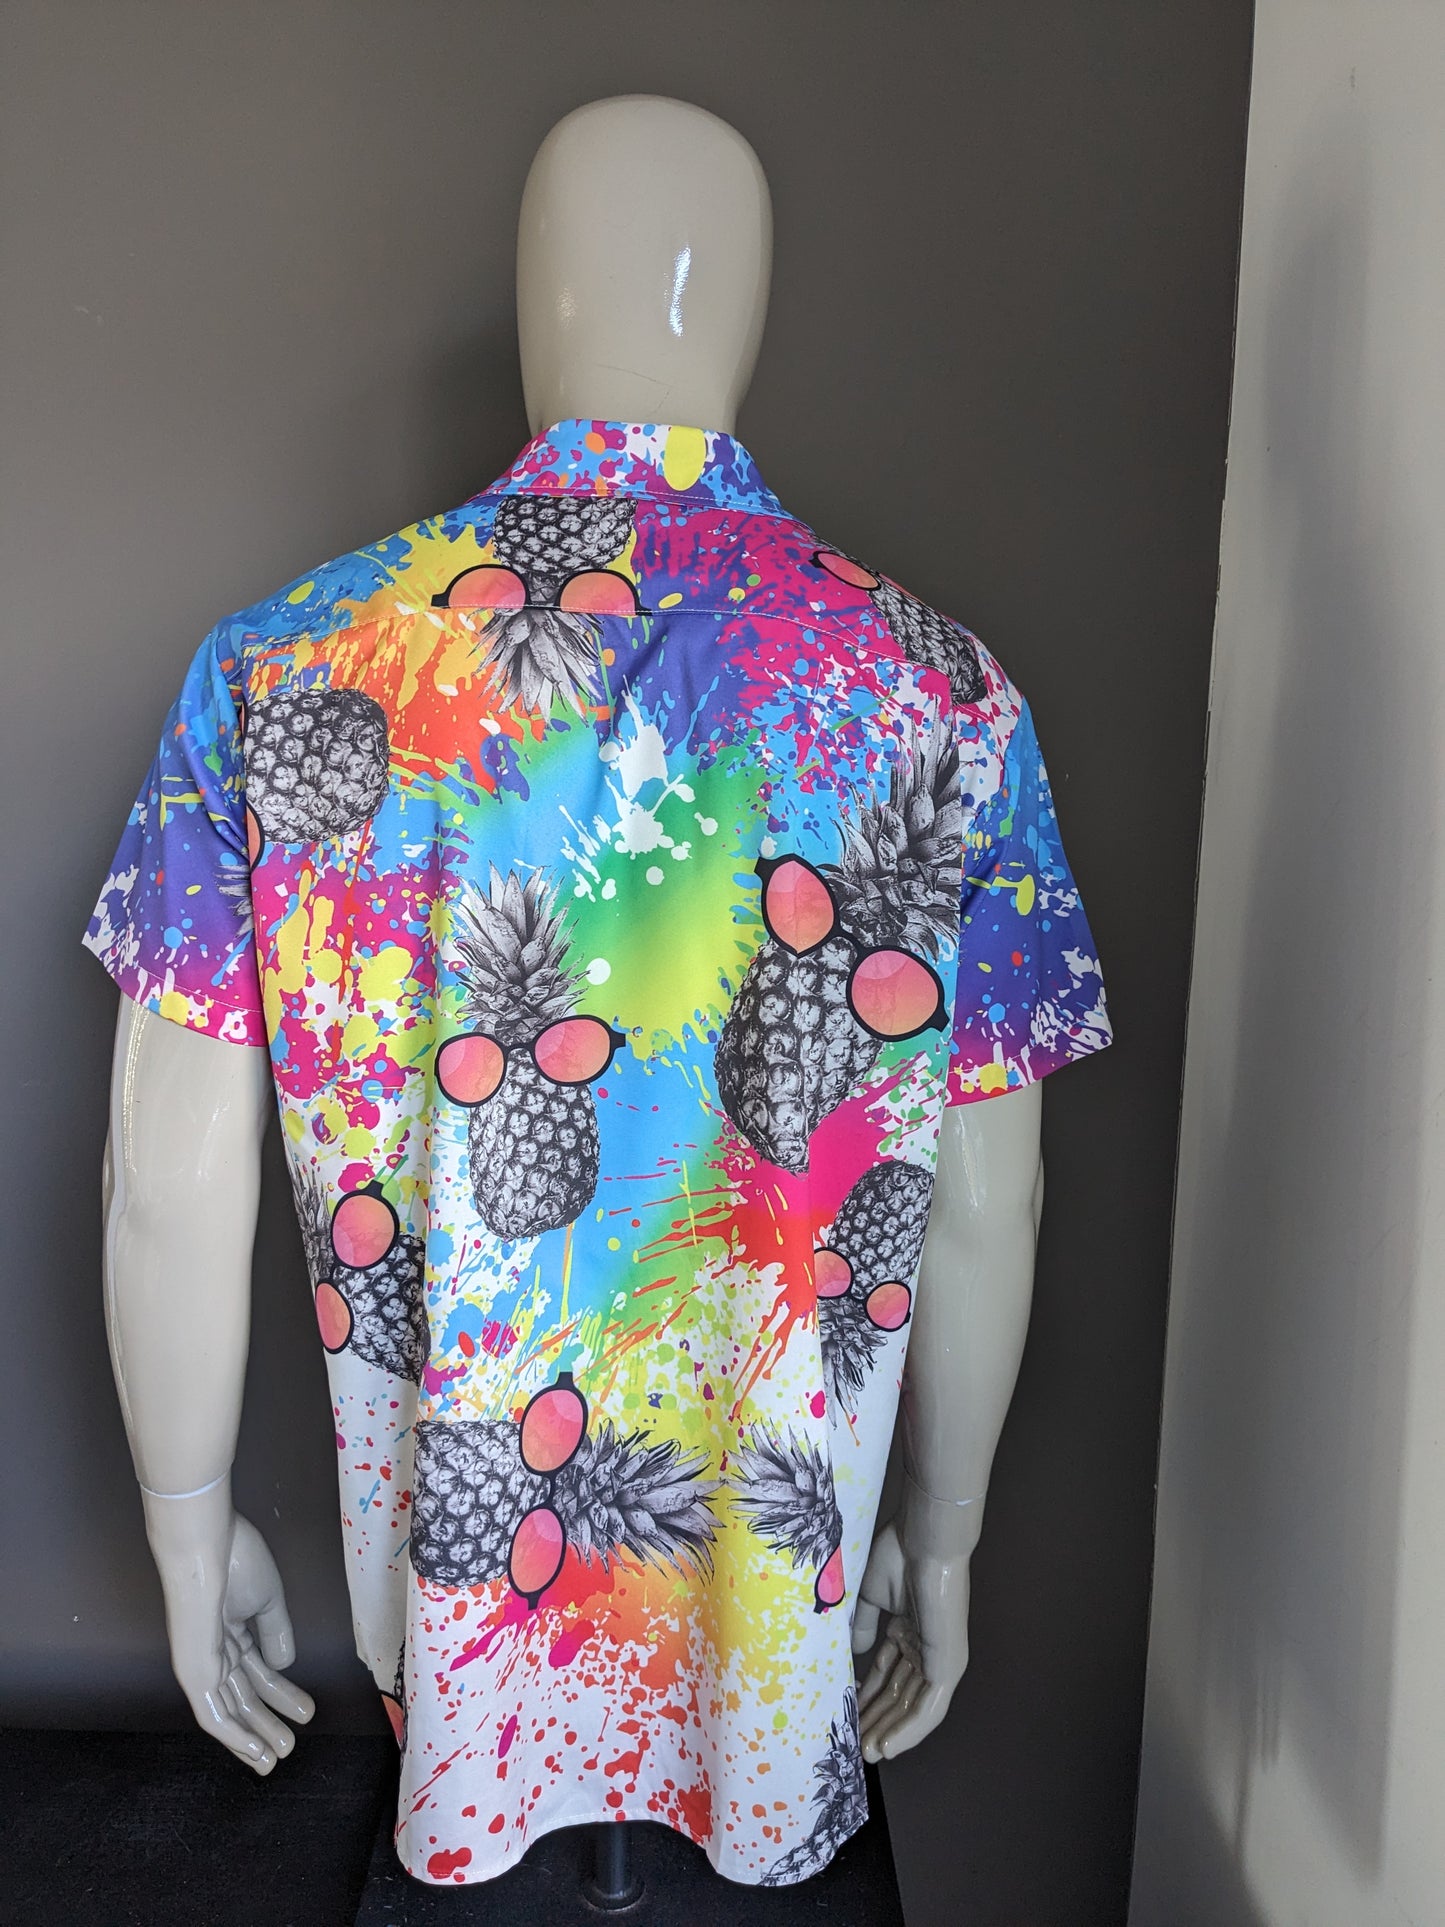 Pre-shrunk pineapple shirt short sleeve. Colored print. Size XL.